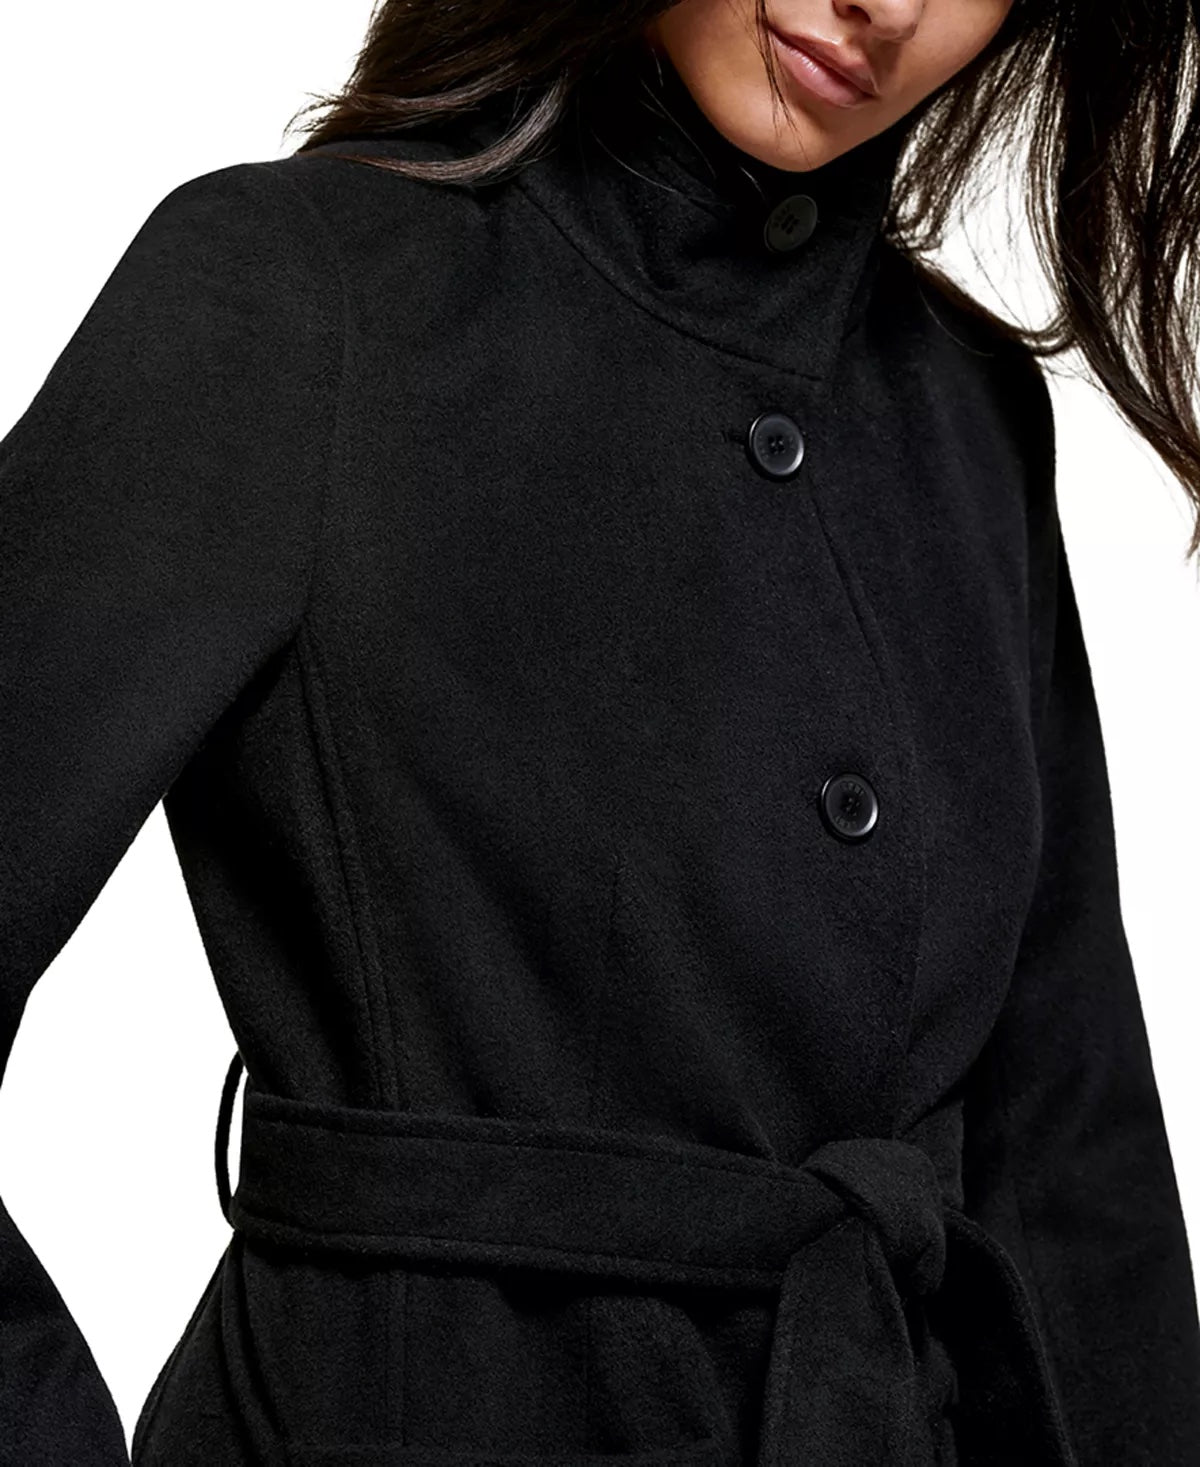 DKNY Women's Stand-Collar Button-Front Coat Black XL NO BELT